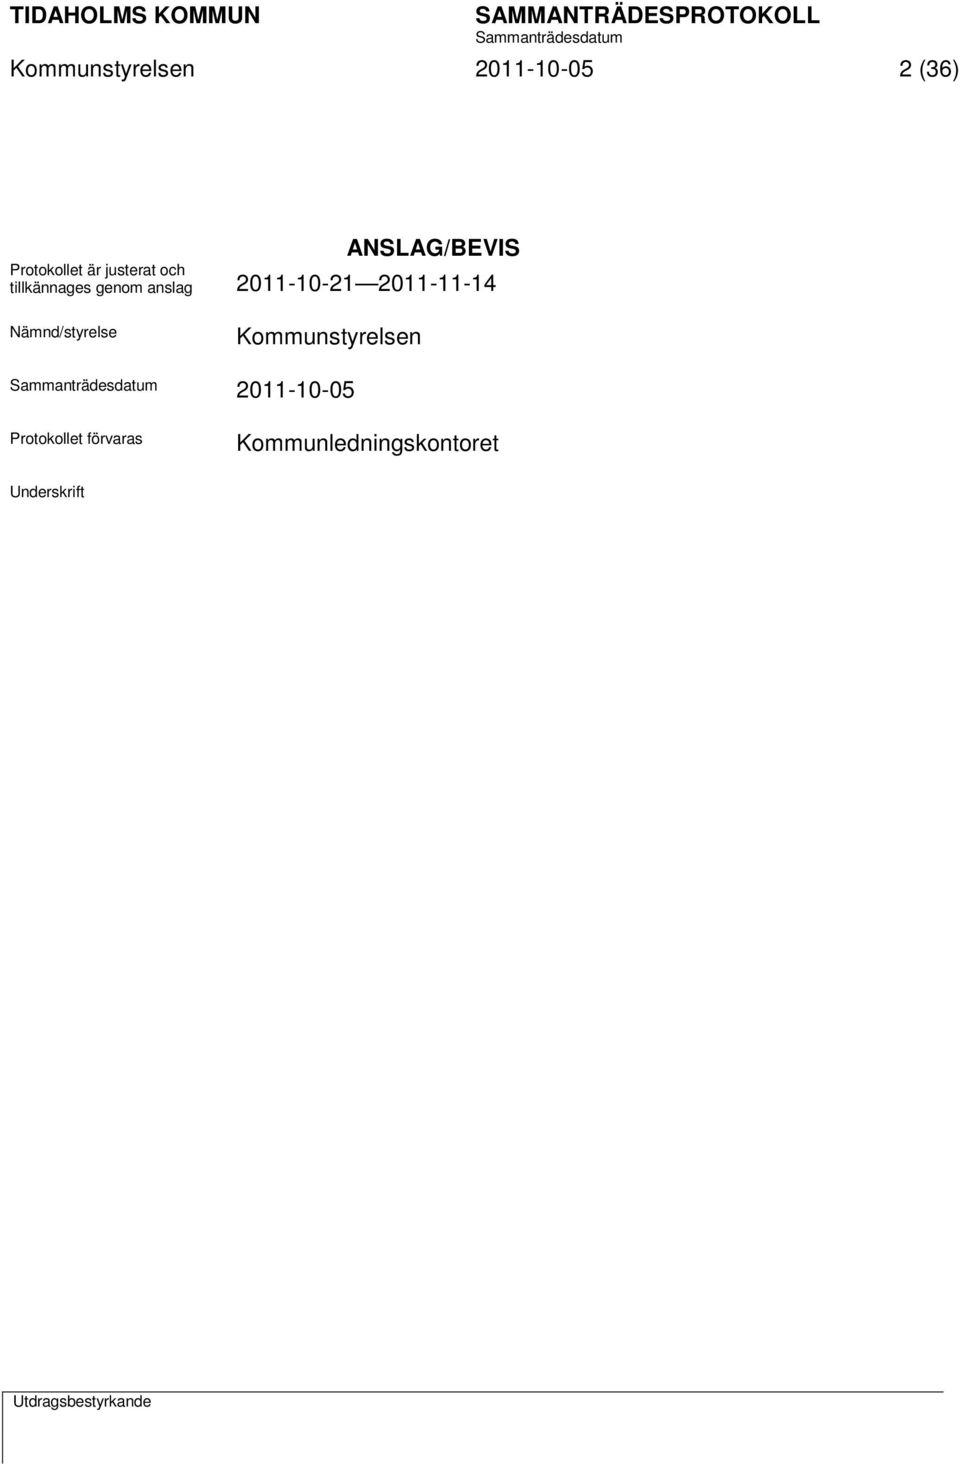 2011-11-14 Nämnd/styrelse Kommunstyrelsen 2011-10-05